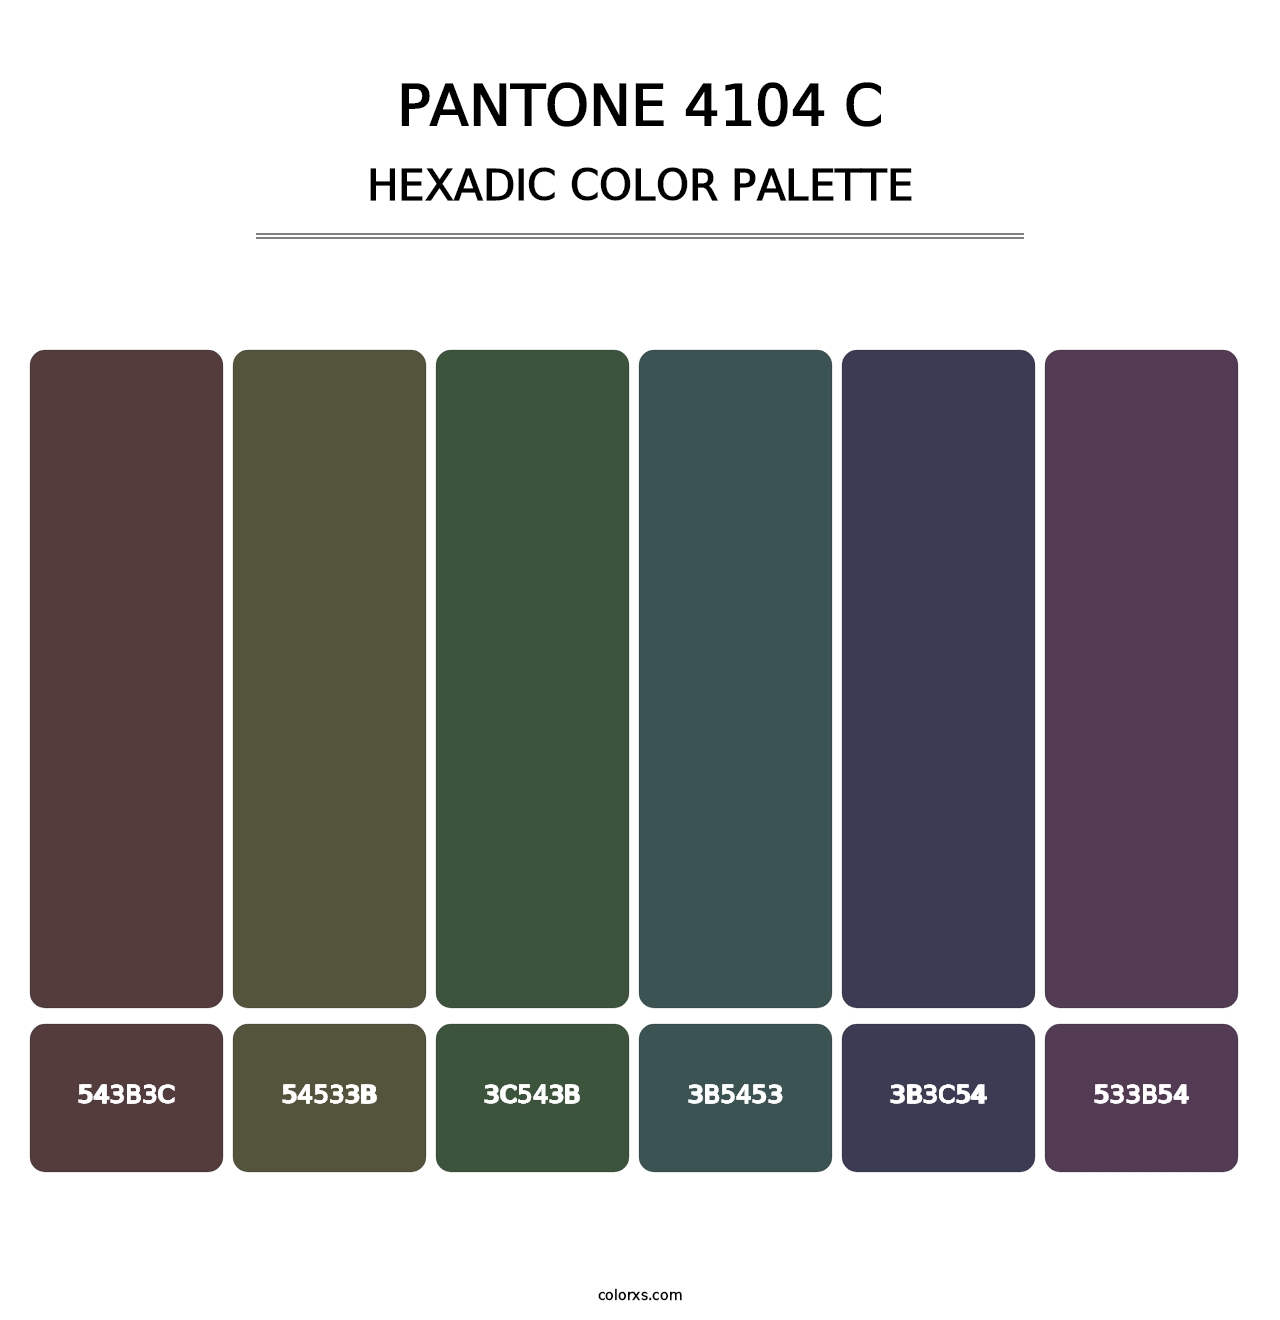 PANTONE 4104 C - Hexadic Color Palette